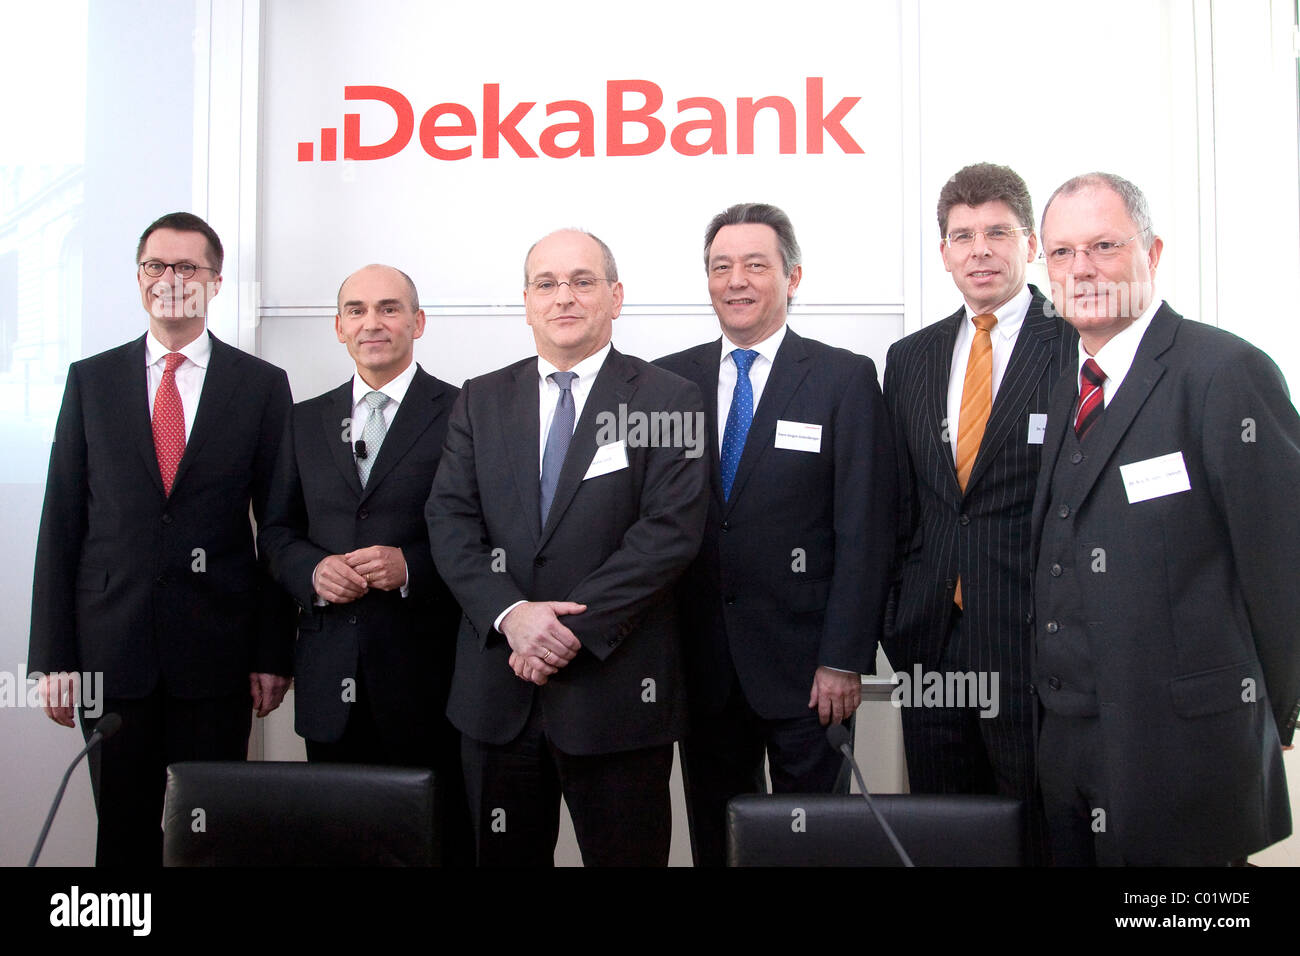 From left to right, Oliver Behrens, Franz Waas, Chairman, Walter Groll, Hans-Juergen Gutenberger, Matthias Danne, and Friedrich Stock Photo